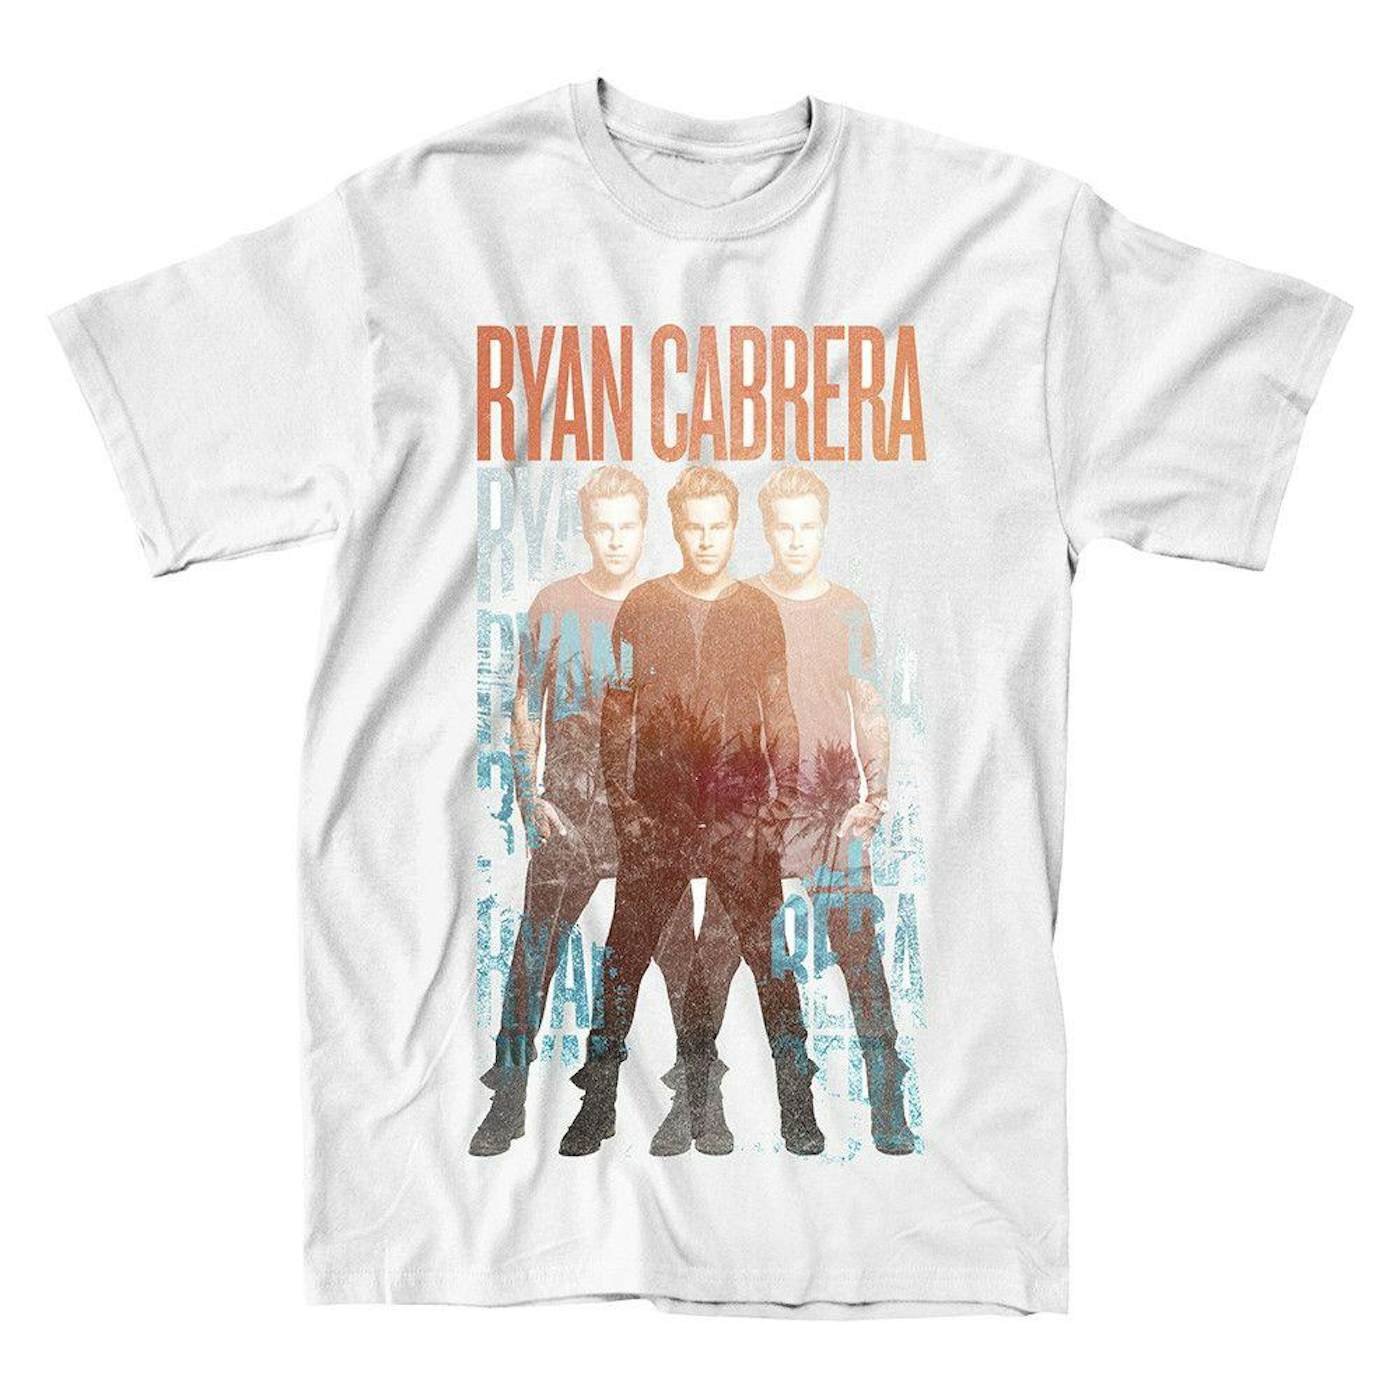 Ryan Cabrera Tri-Ry T-shirt